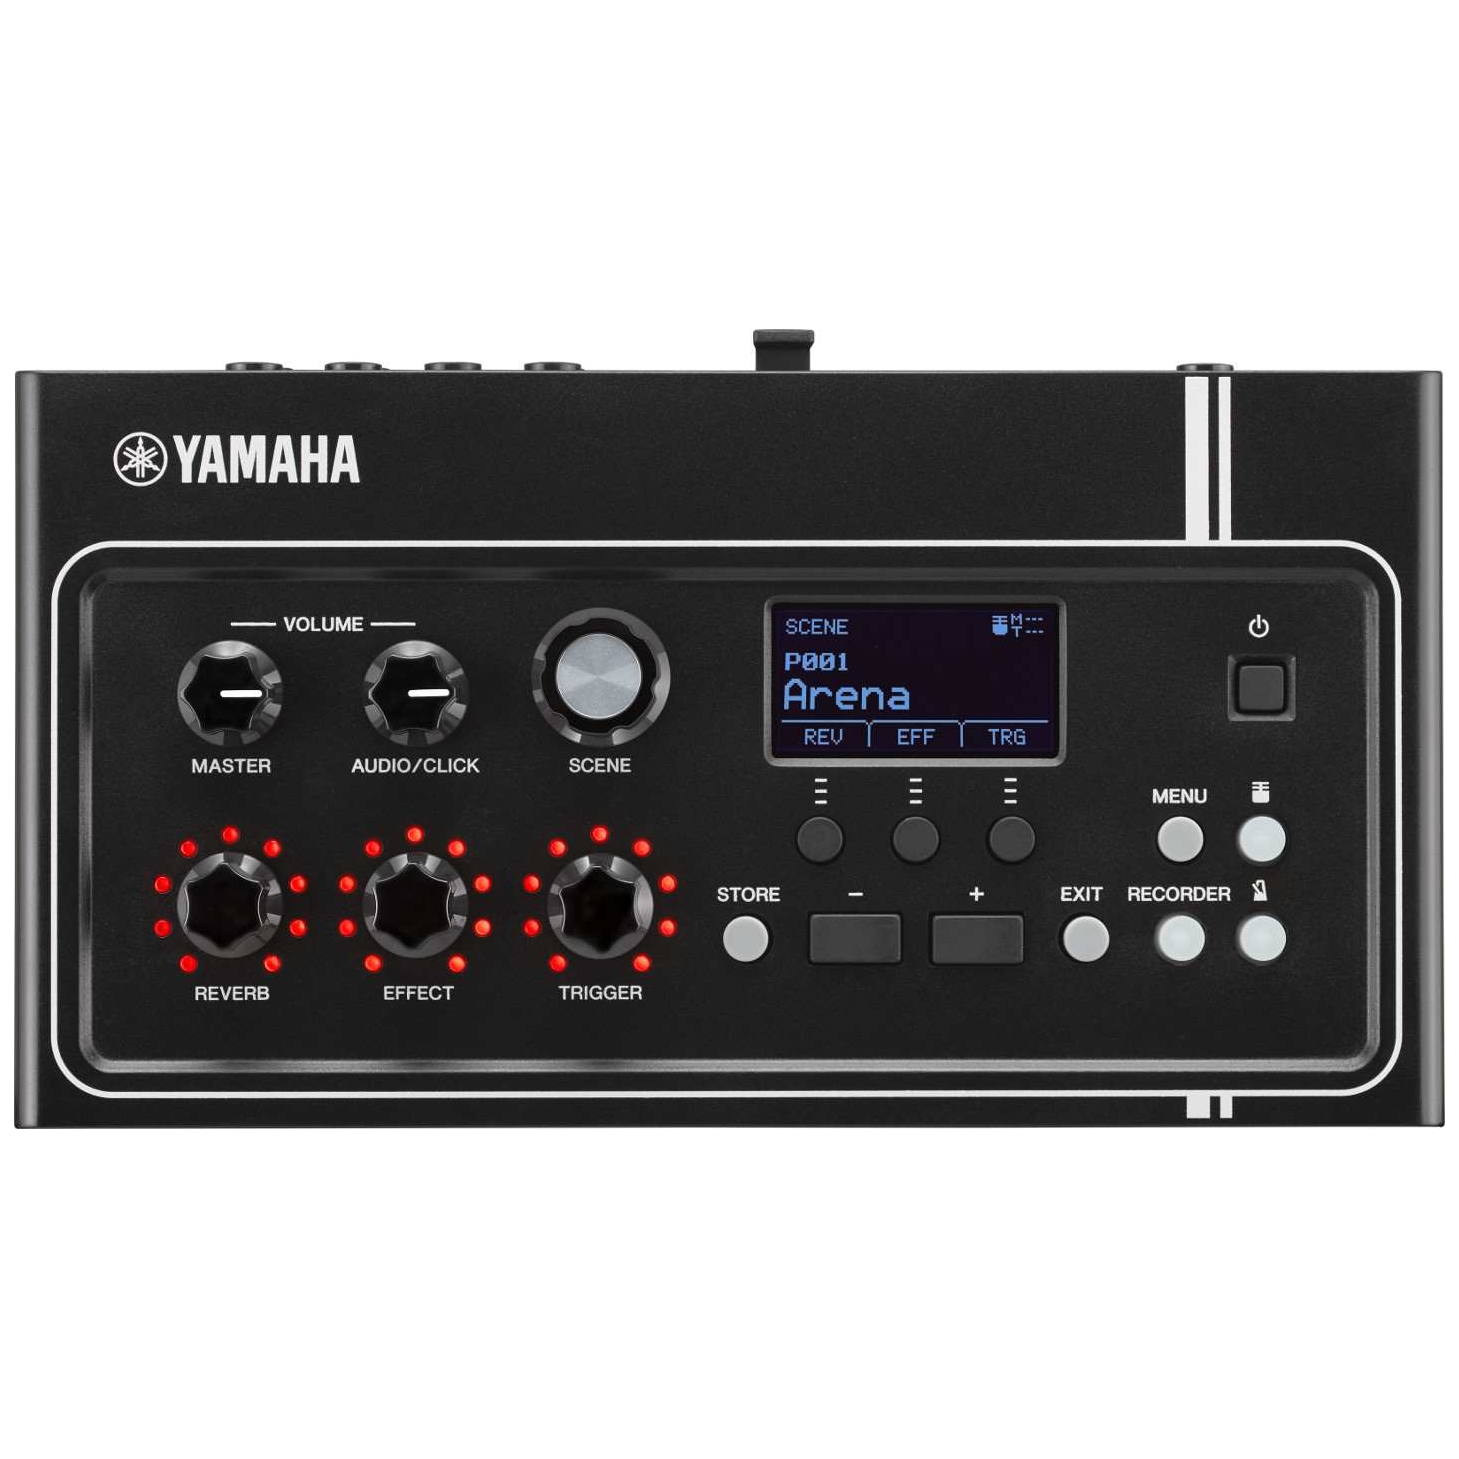 Yamaha EAD10 Drum Modul